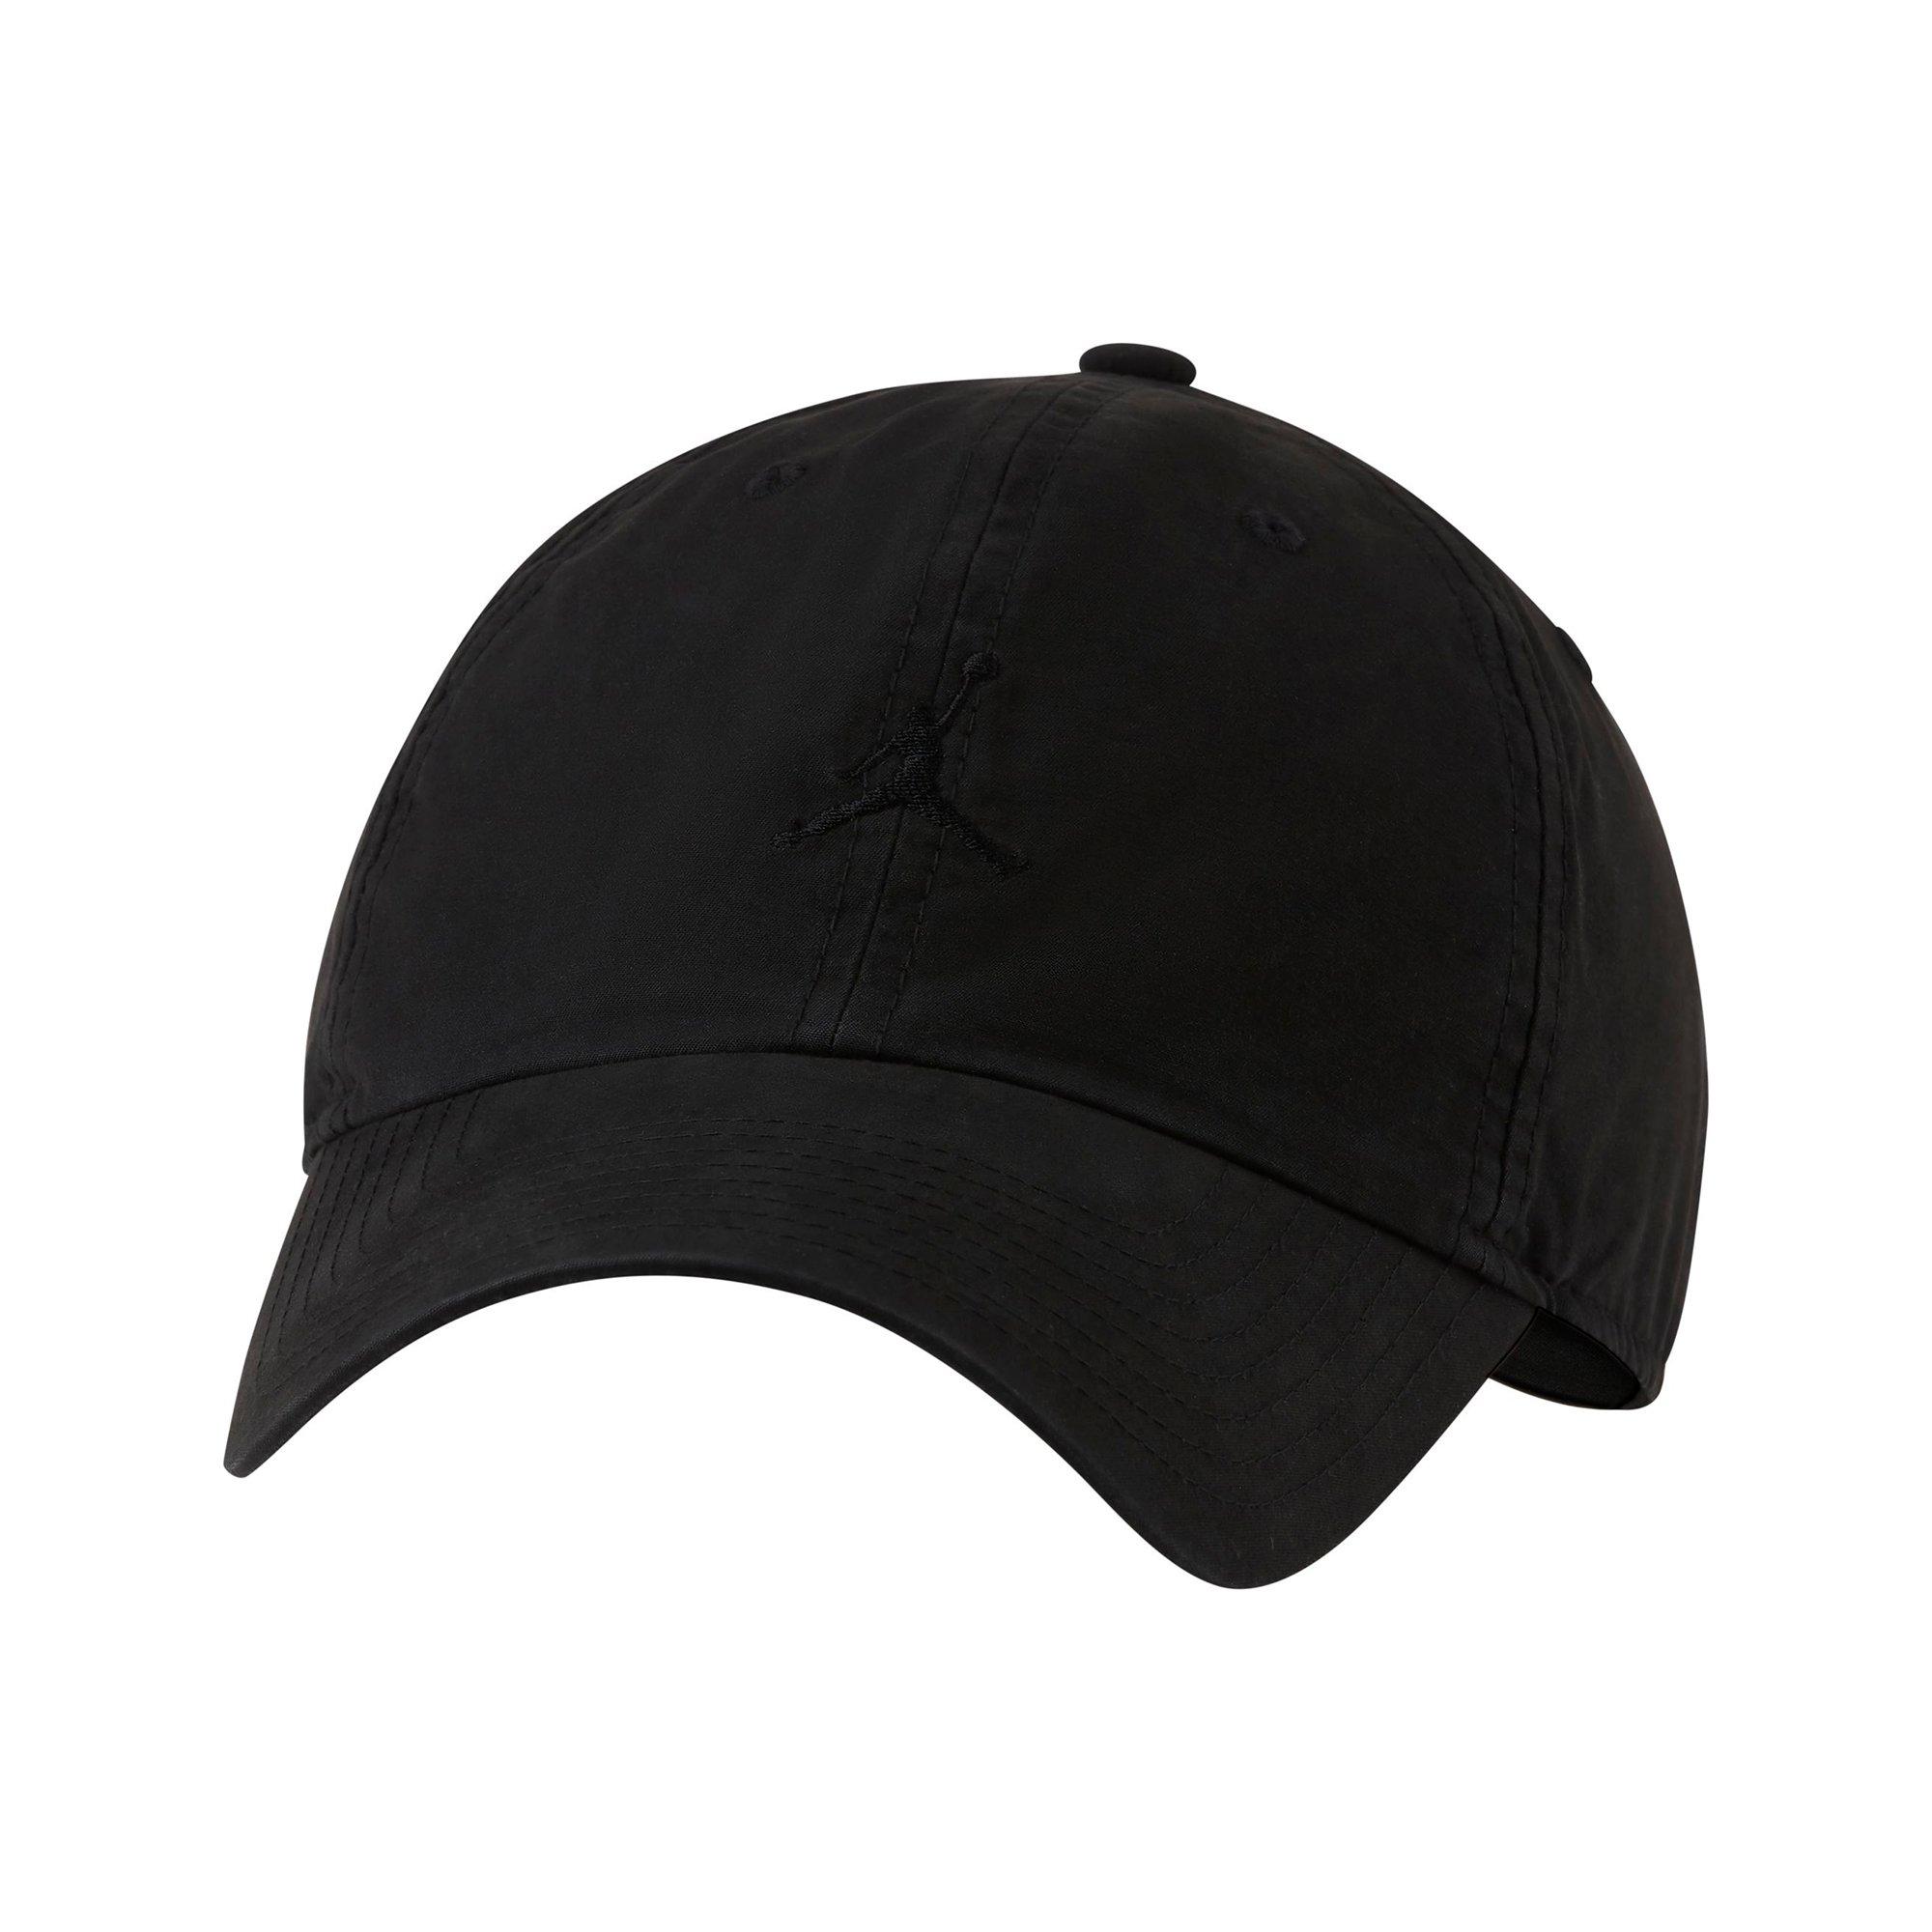 gemak Ounce Bangladesh Jordan Jumpman Heritage86 Washed "Black" Adjustable Hat